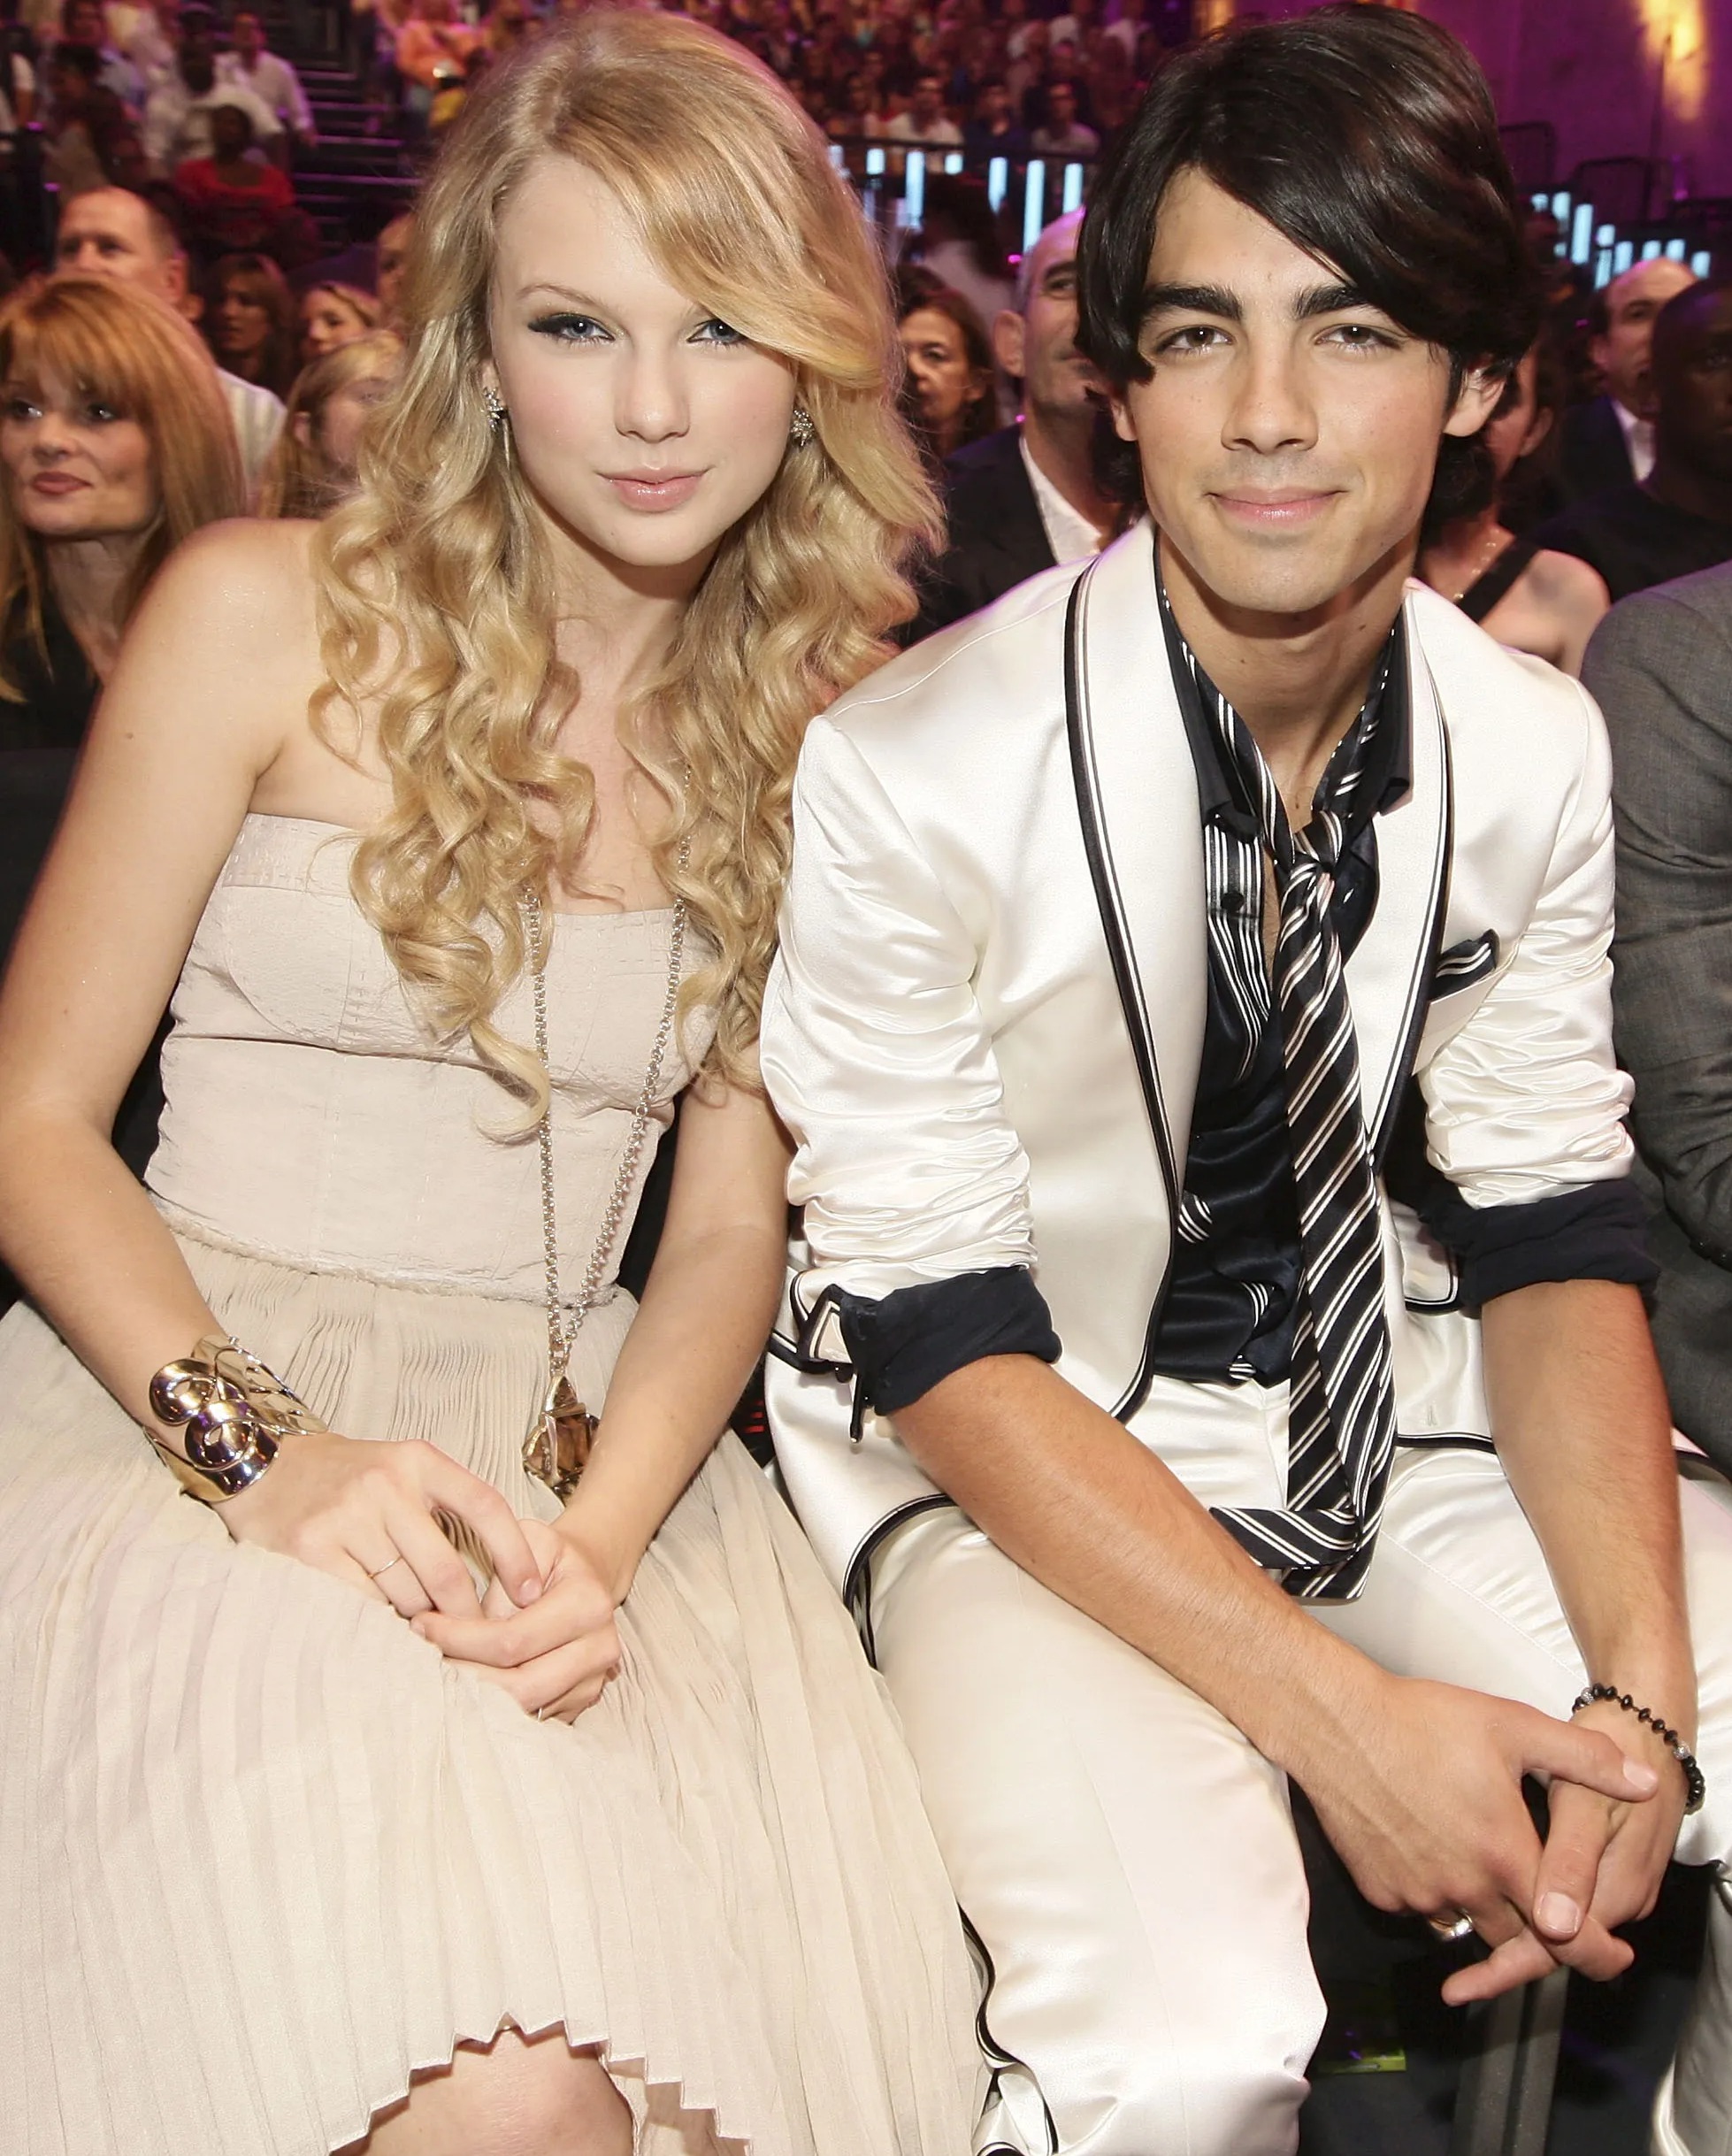 Taylor was upset with how pop star Joe Jonas broke up with her